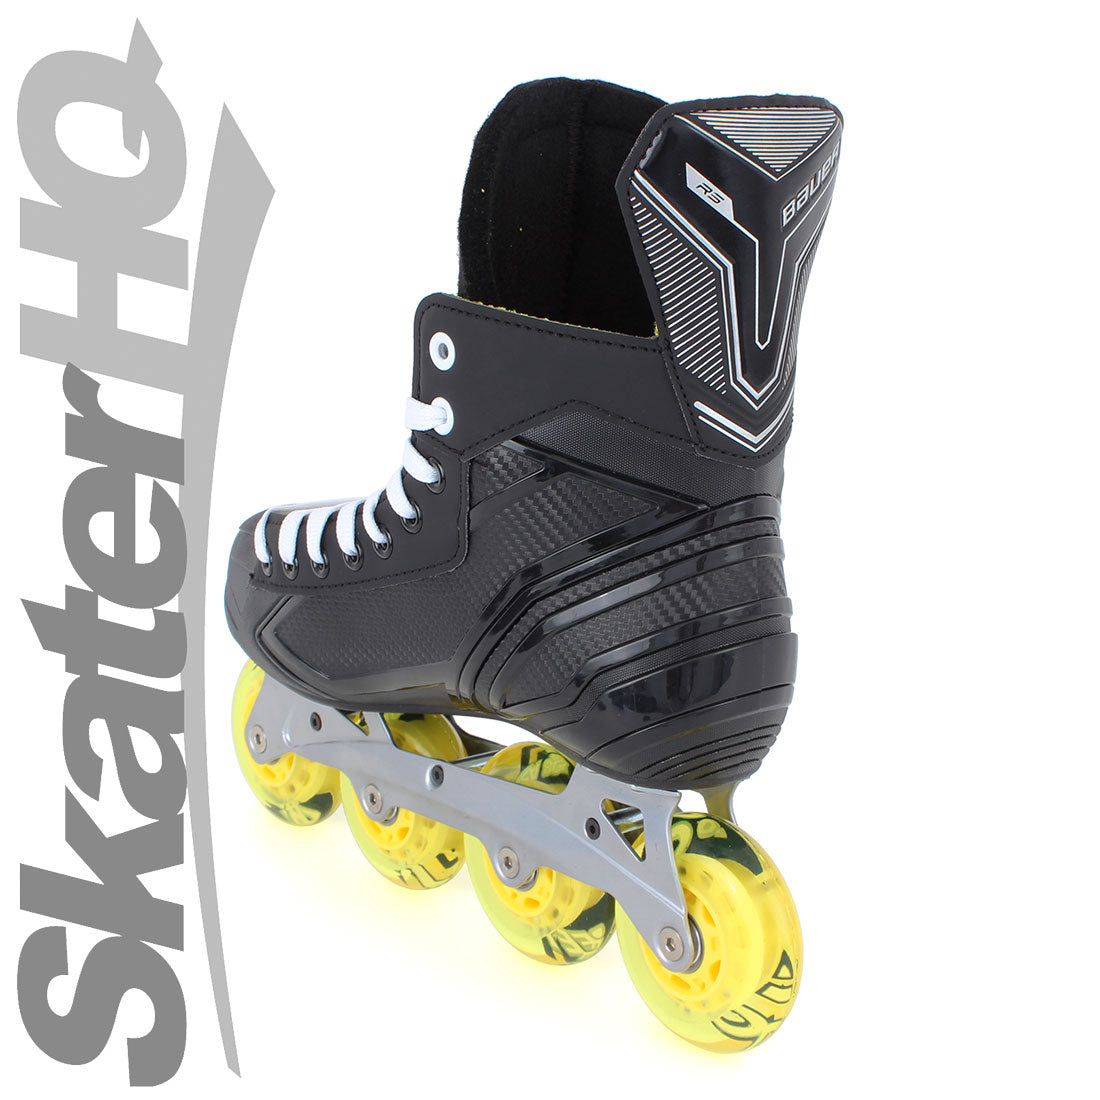 Bauer RS SR Black/Yellow 8.0 / 9.5US Inline Hockey Skates